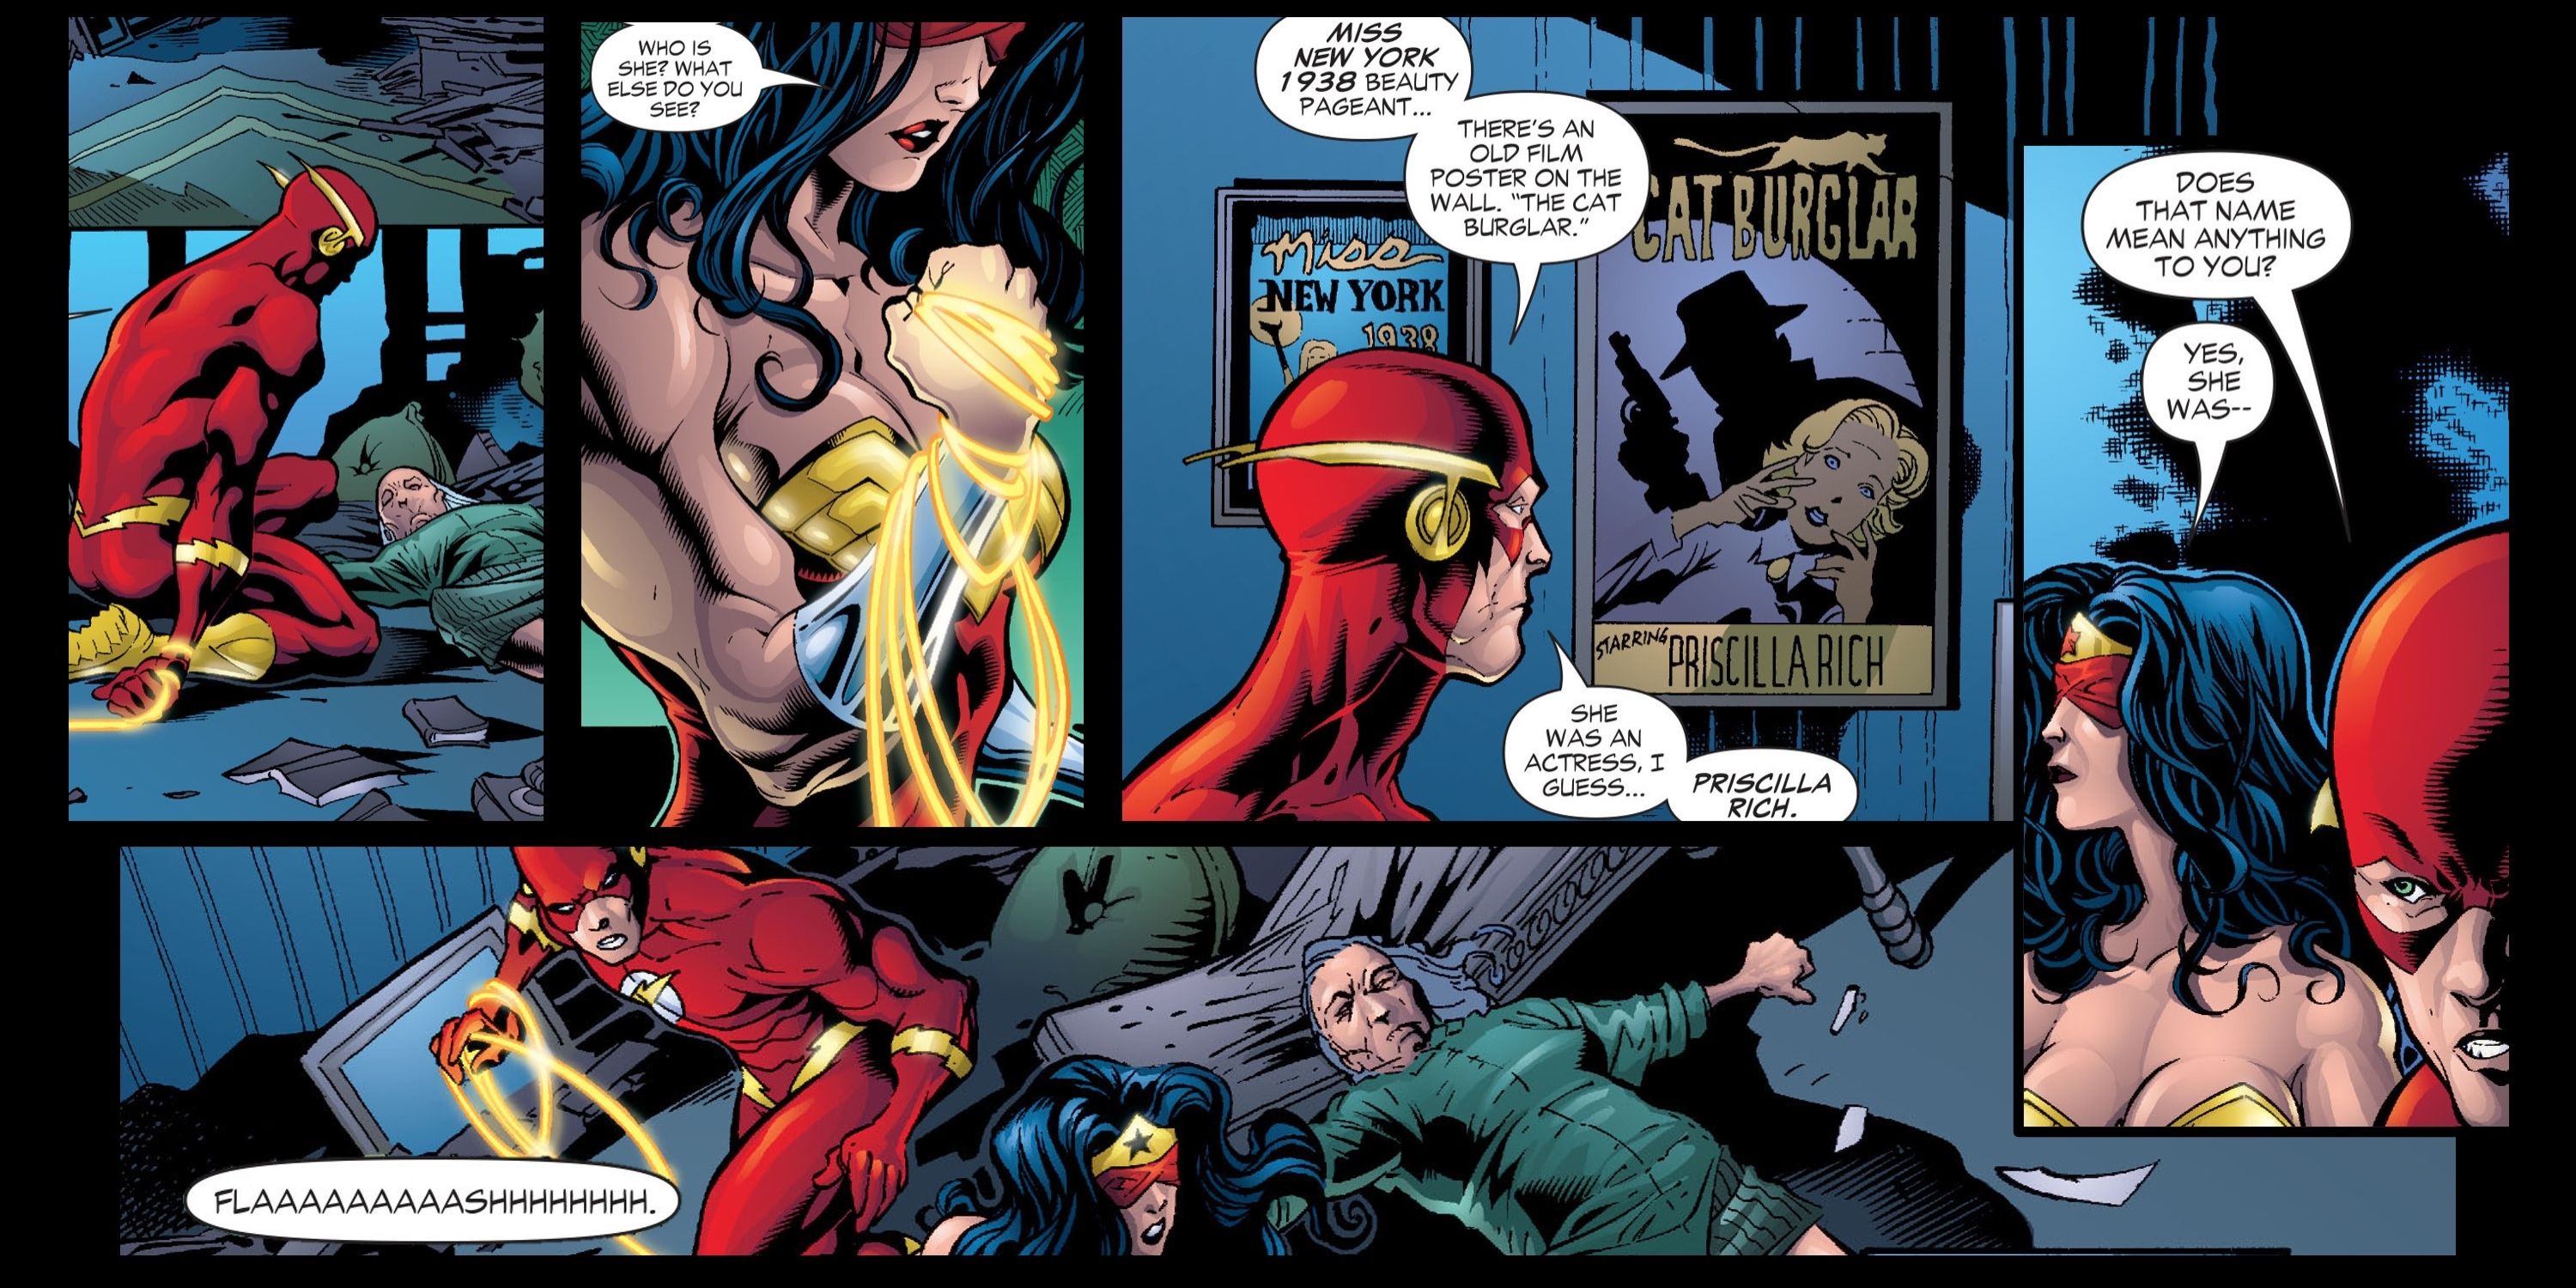 Flash and Wonder Woman find Priscilla Rich's body